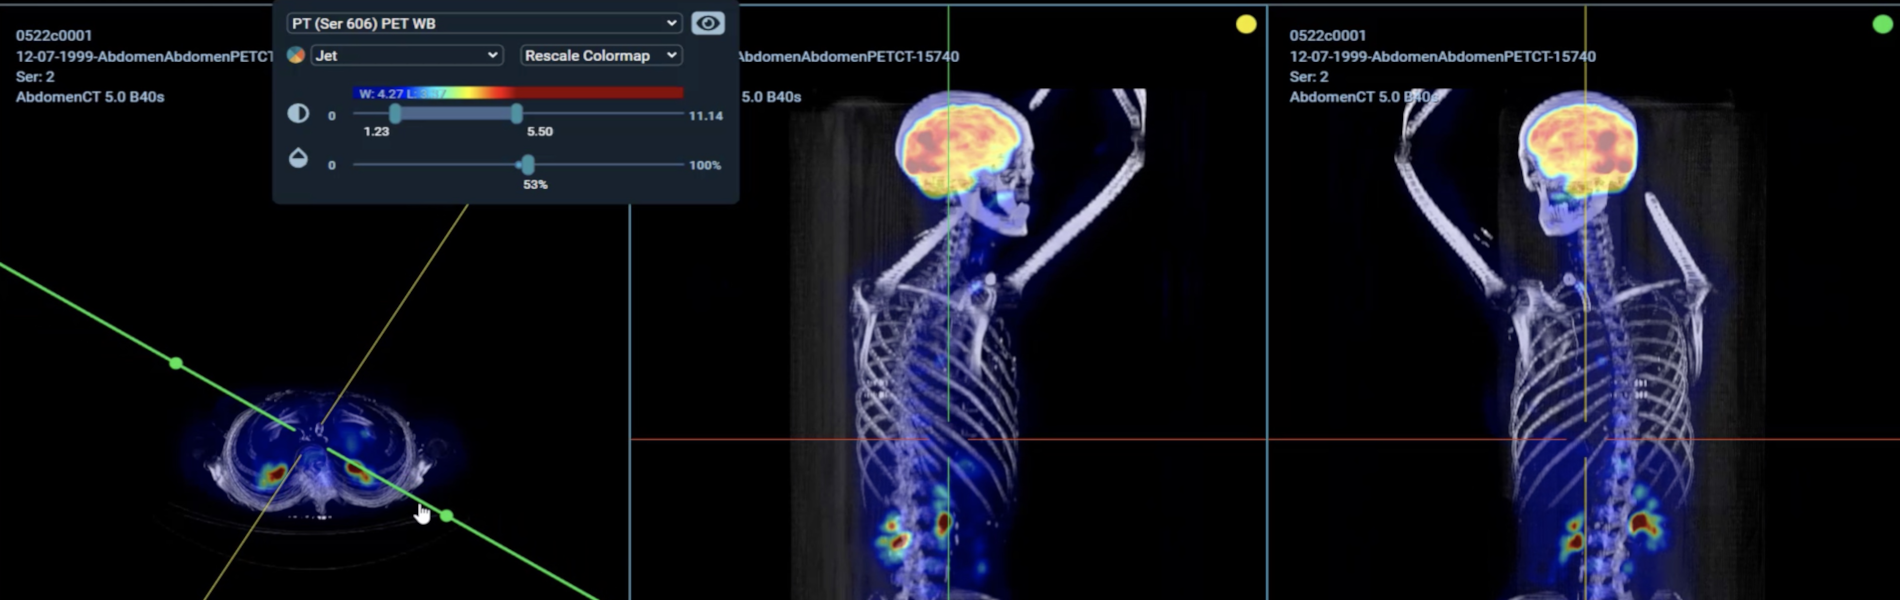 PET-CT image rendered in 3-D